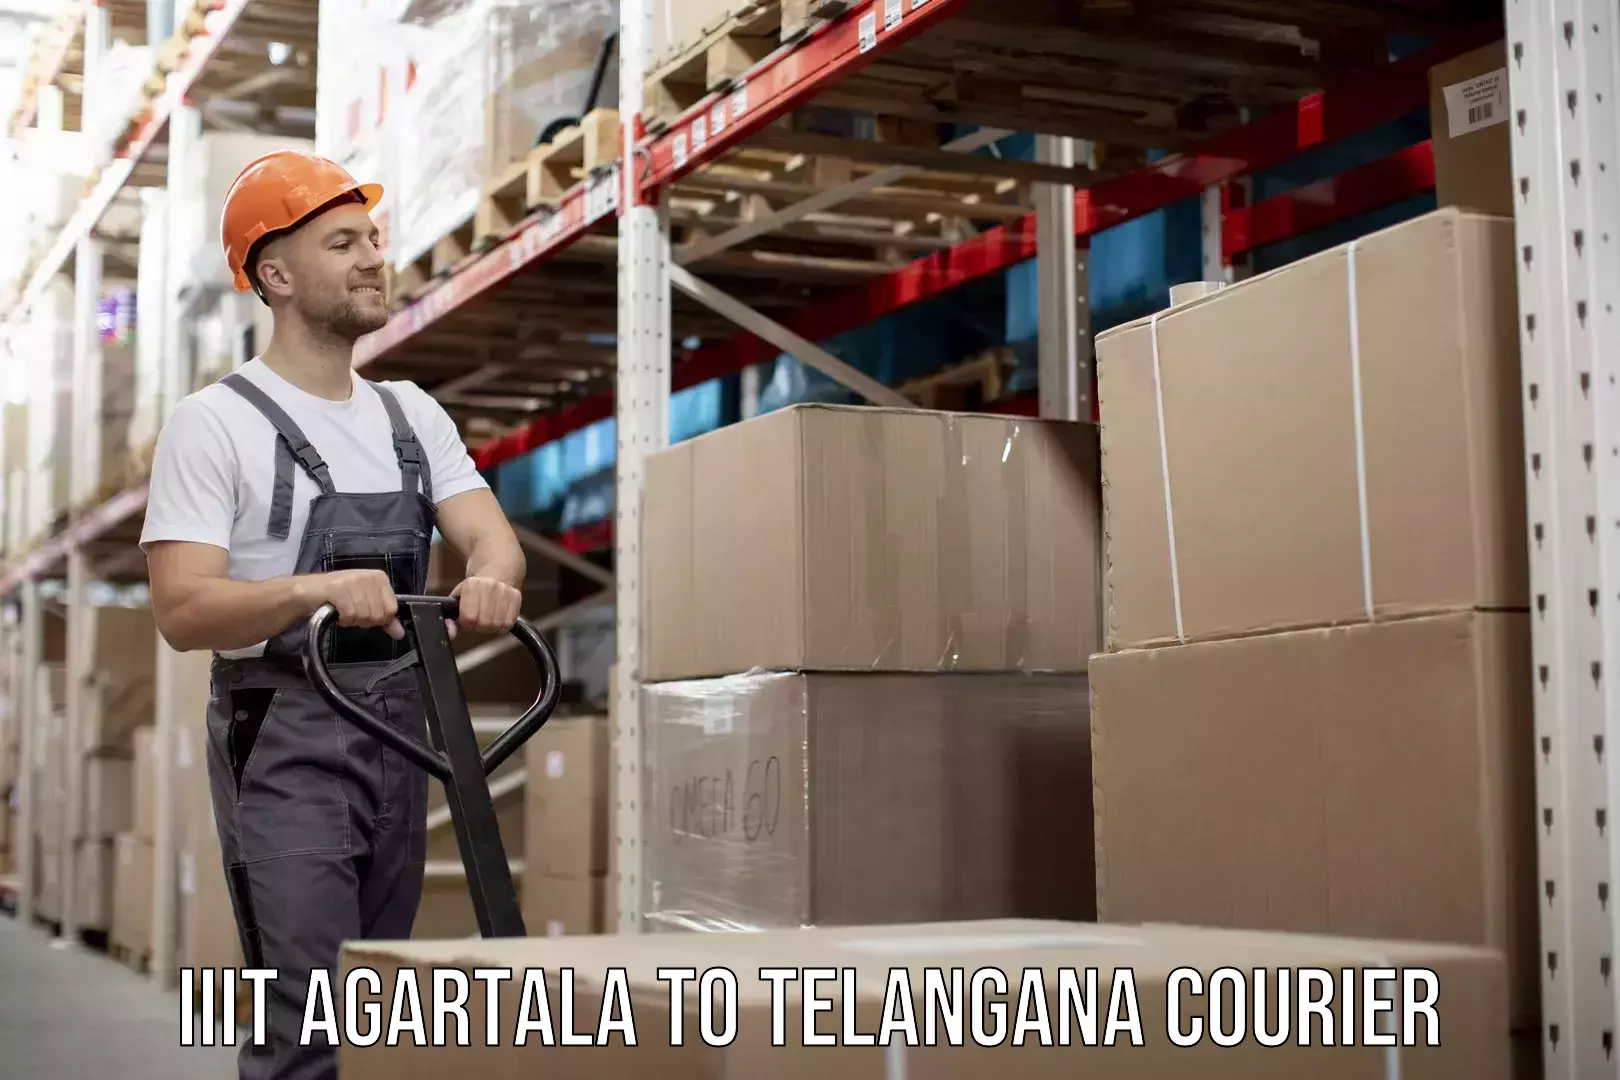 On-call courier service IIIT Agartala to Telangana